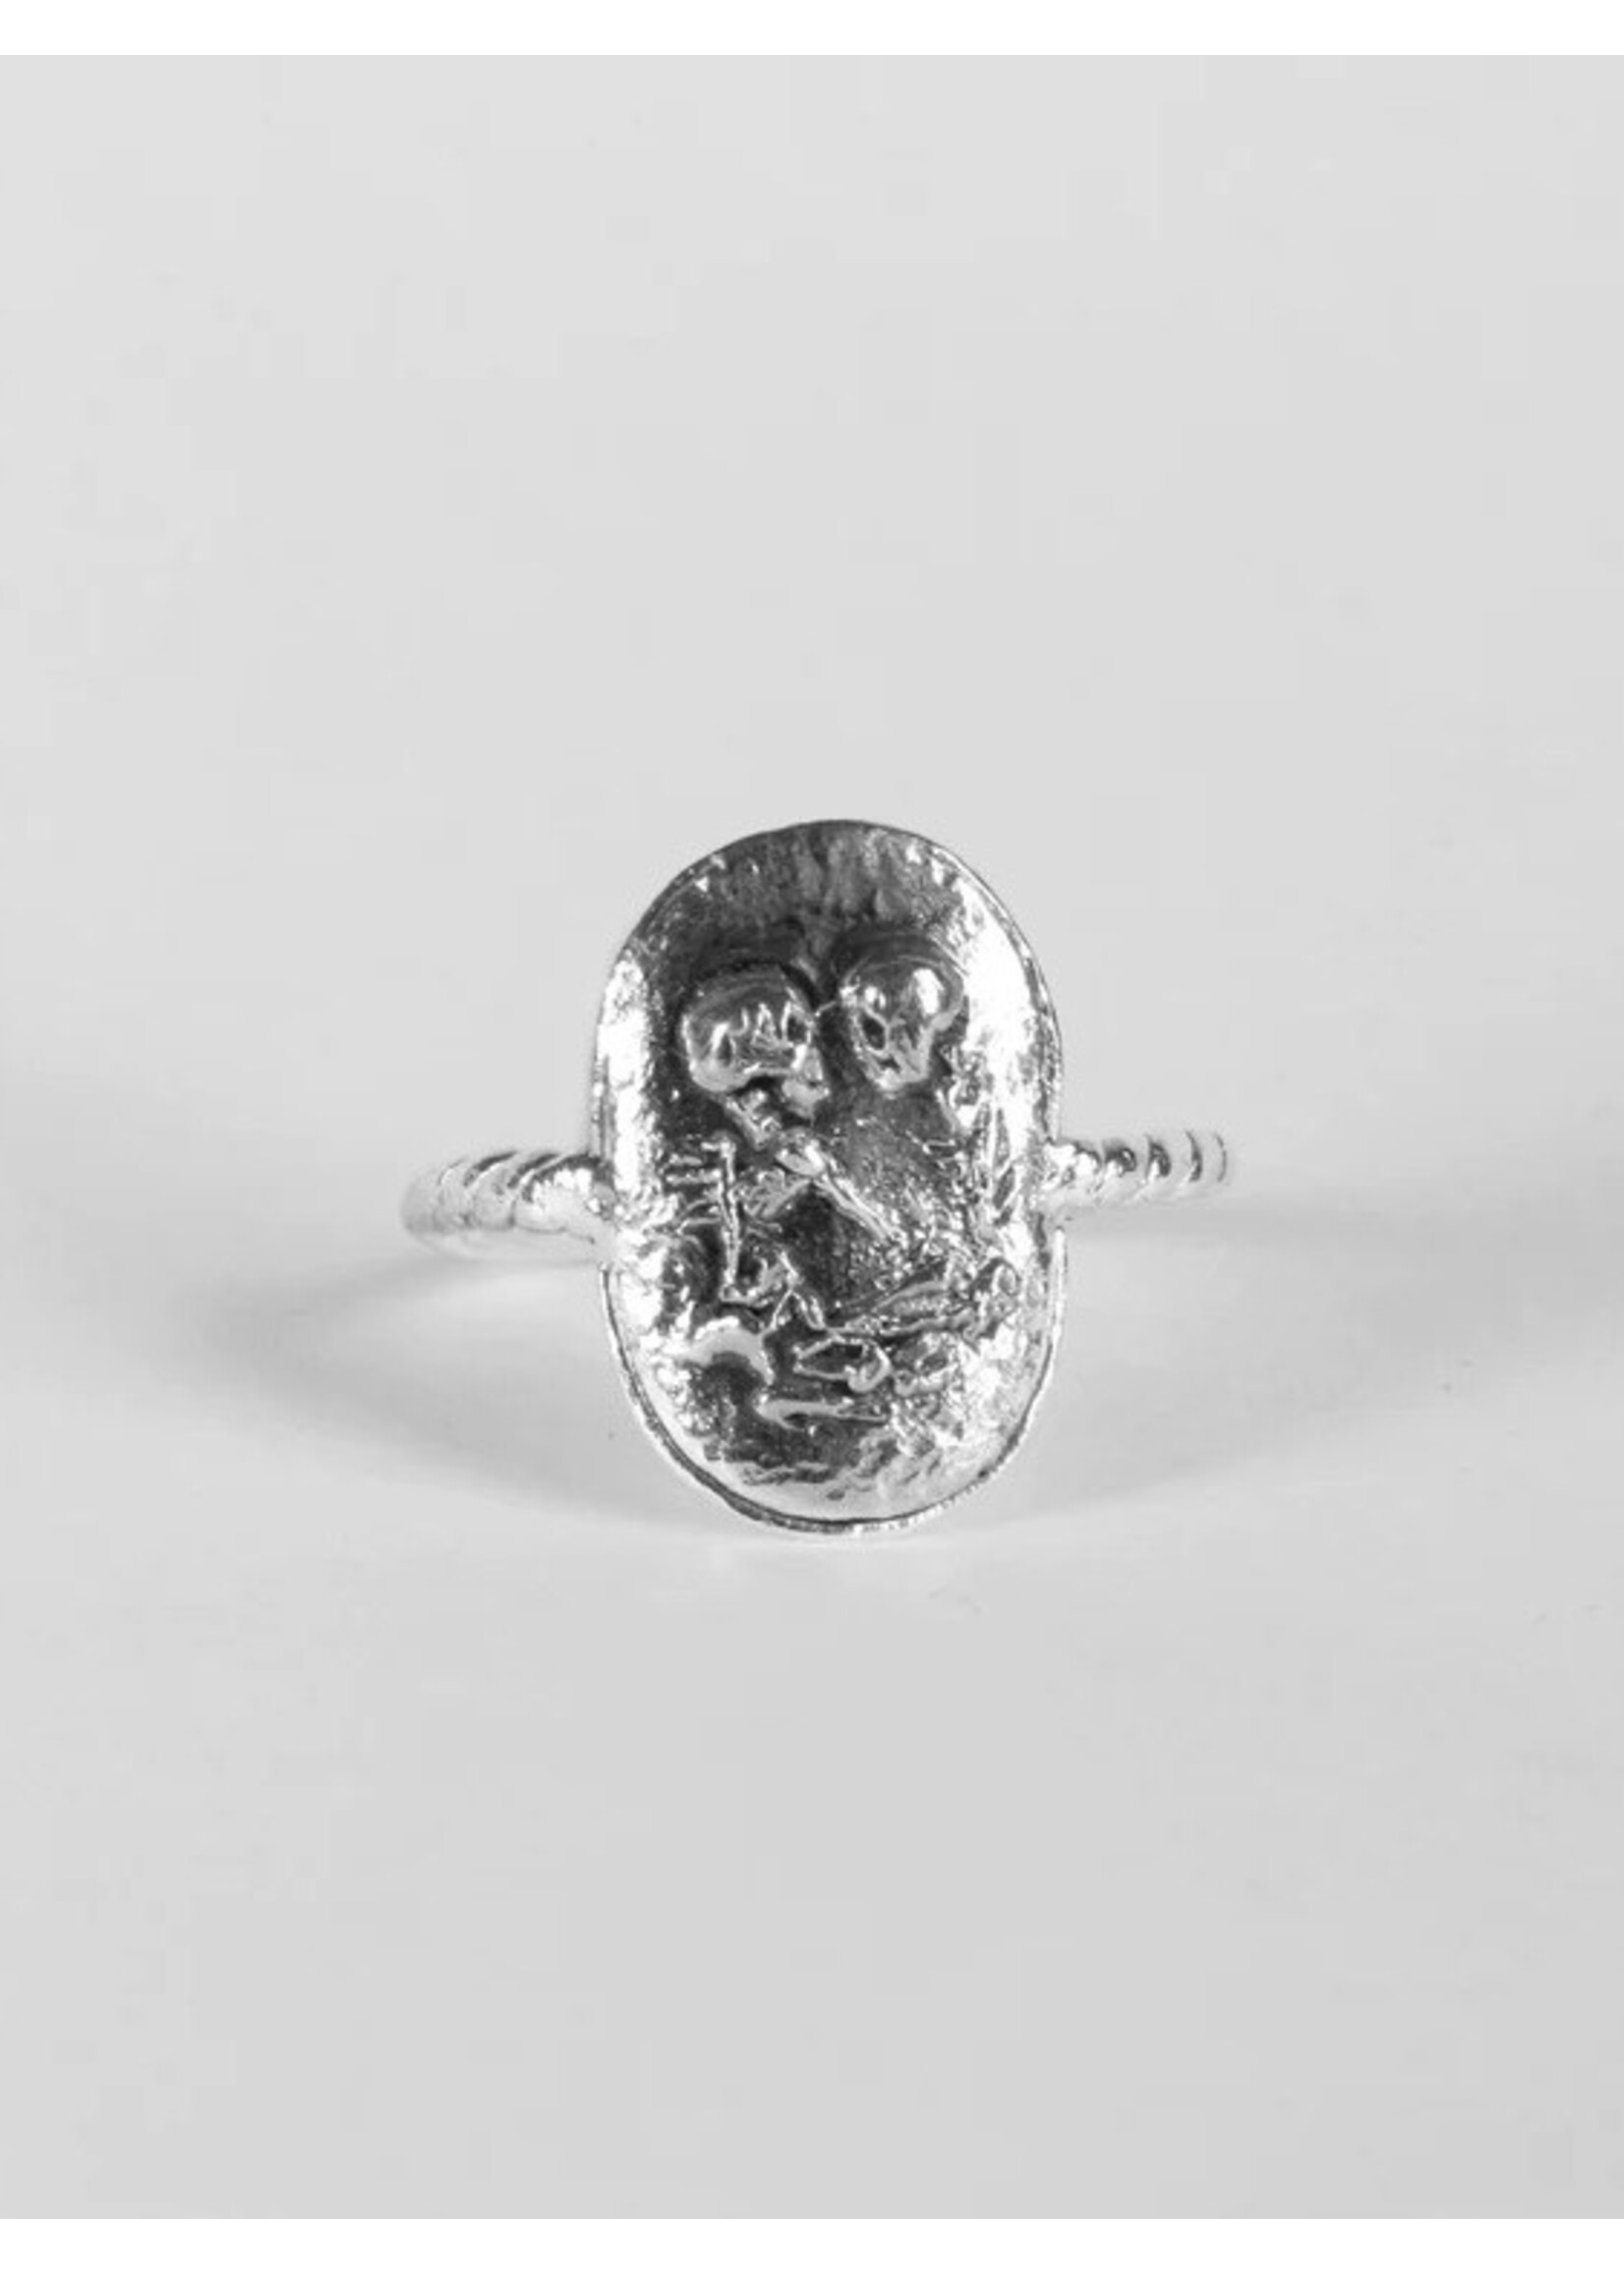 Bilak Jewellery Silver sterling rings "Skeleton Lovers" by Bilak Jewerly